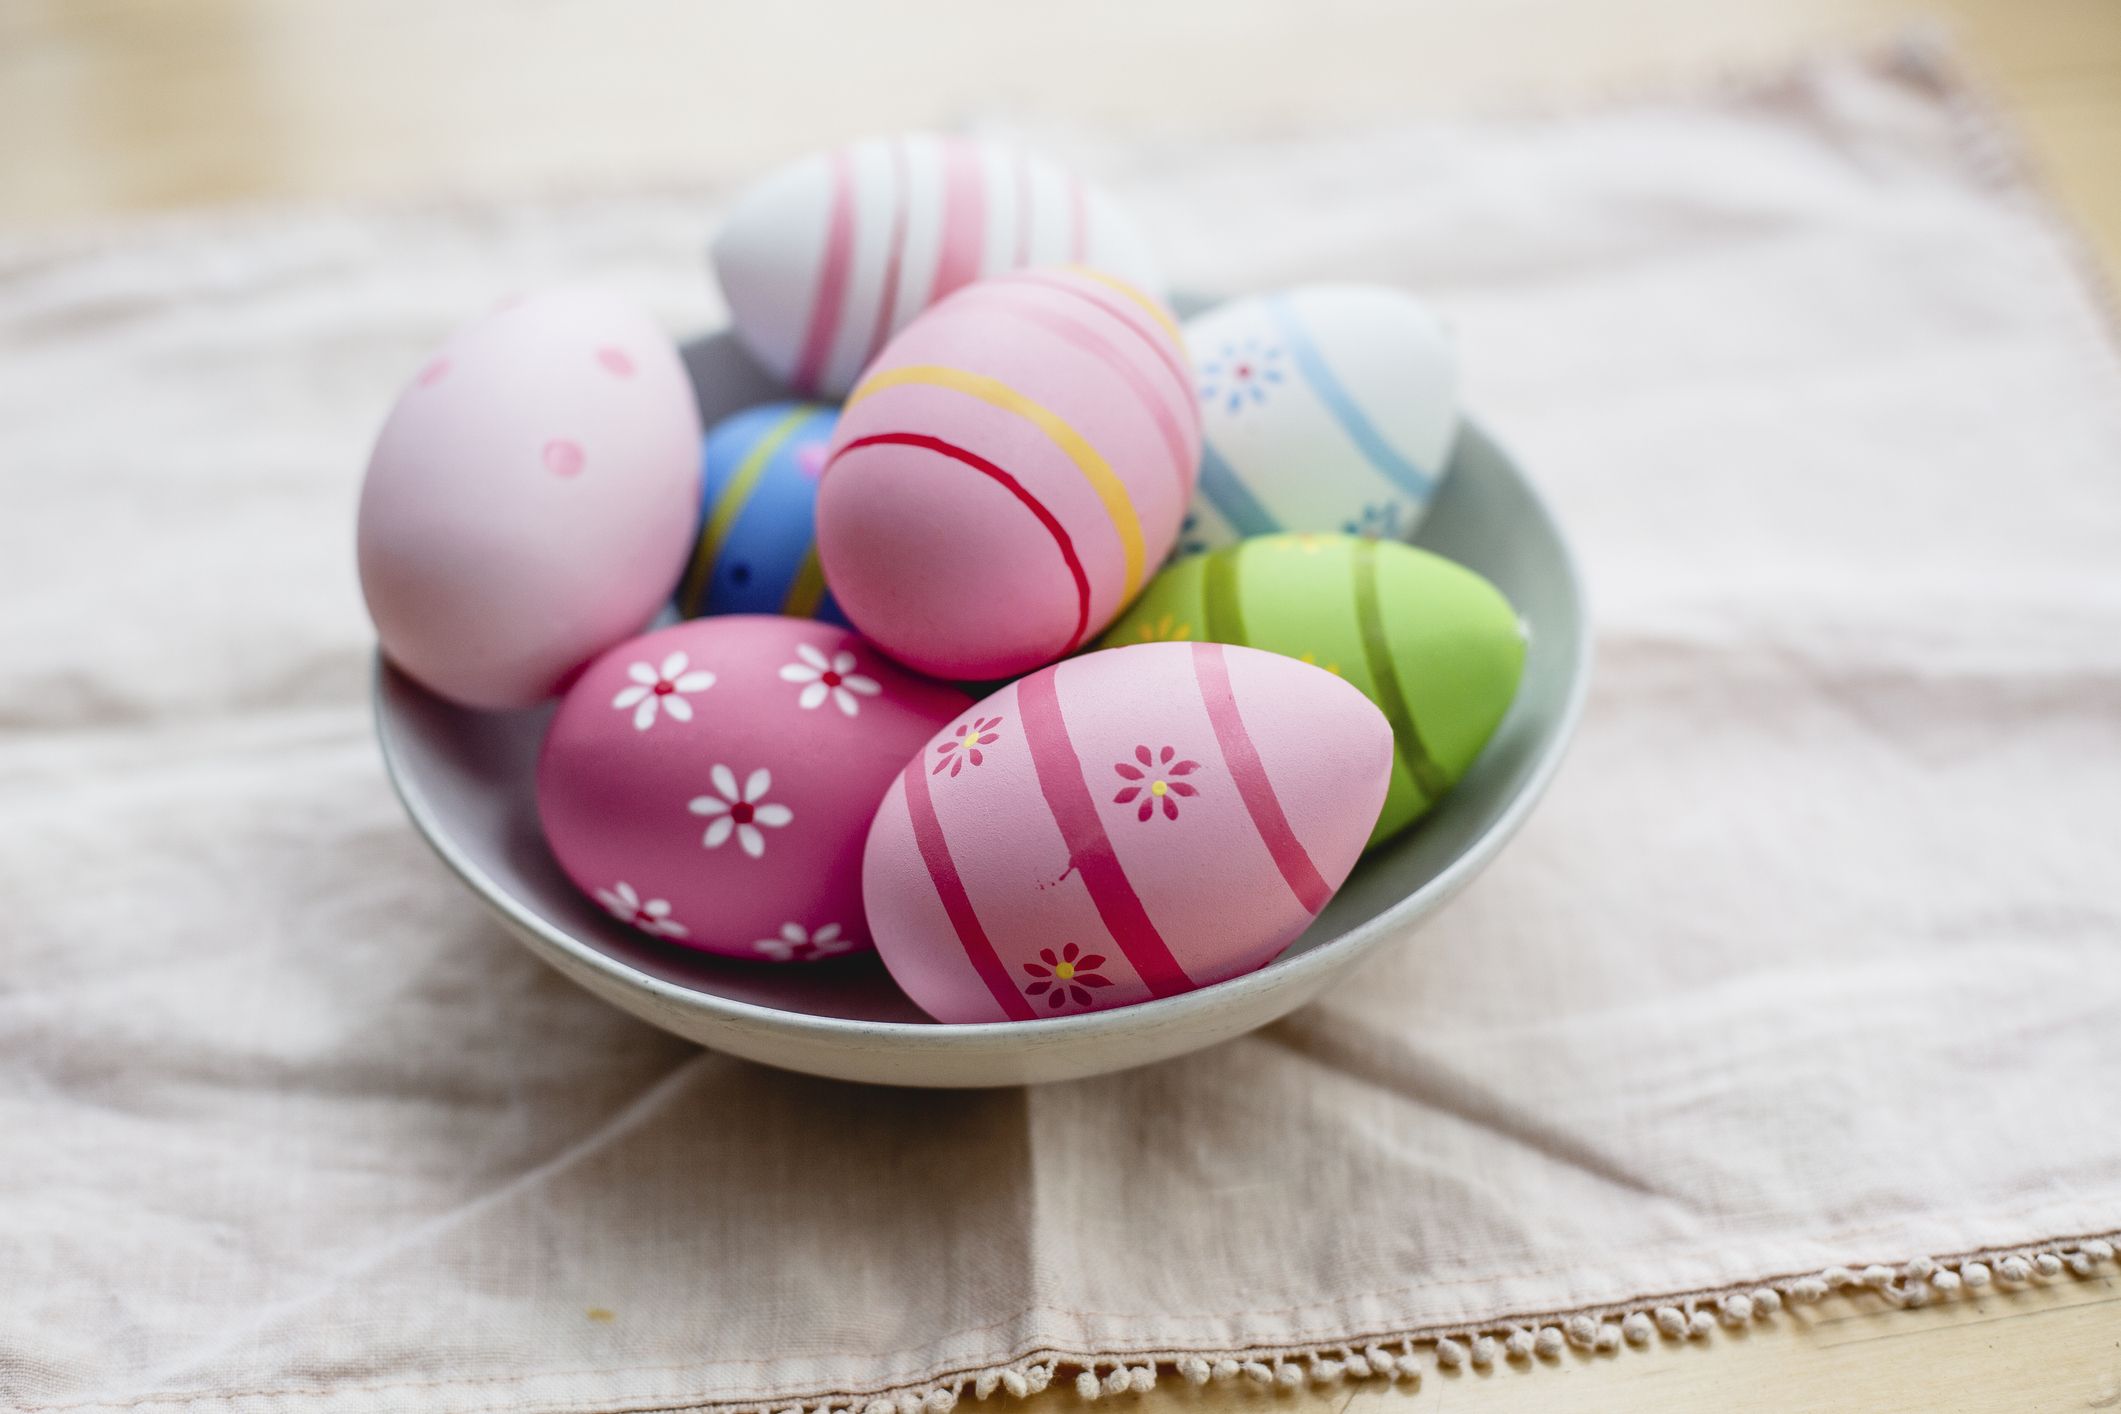 17 Easter Egg Decorating Ideas From Pinterest